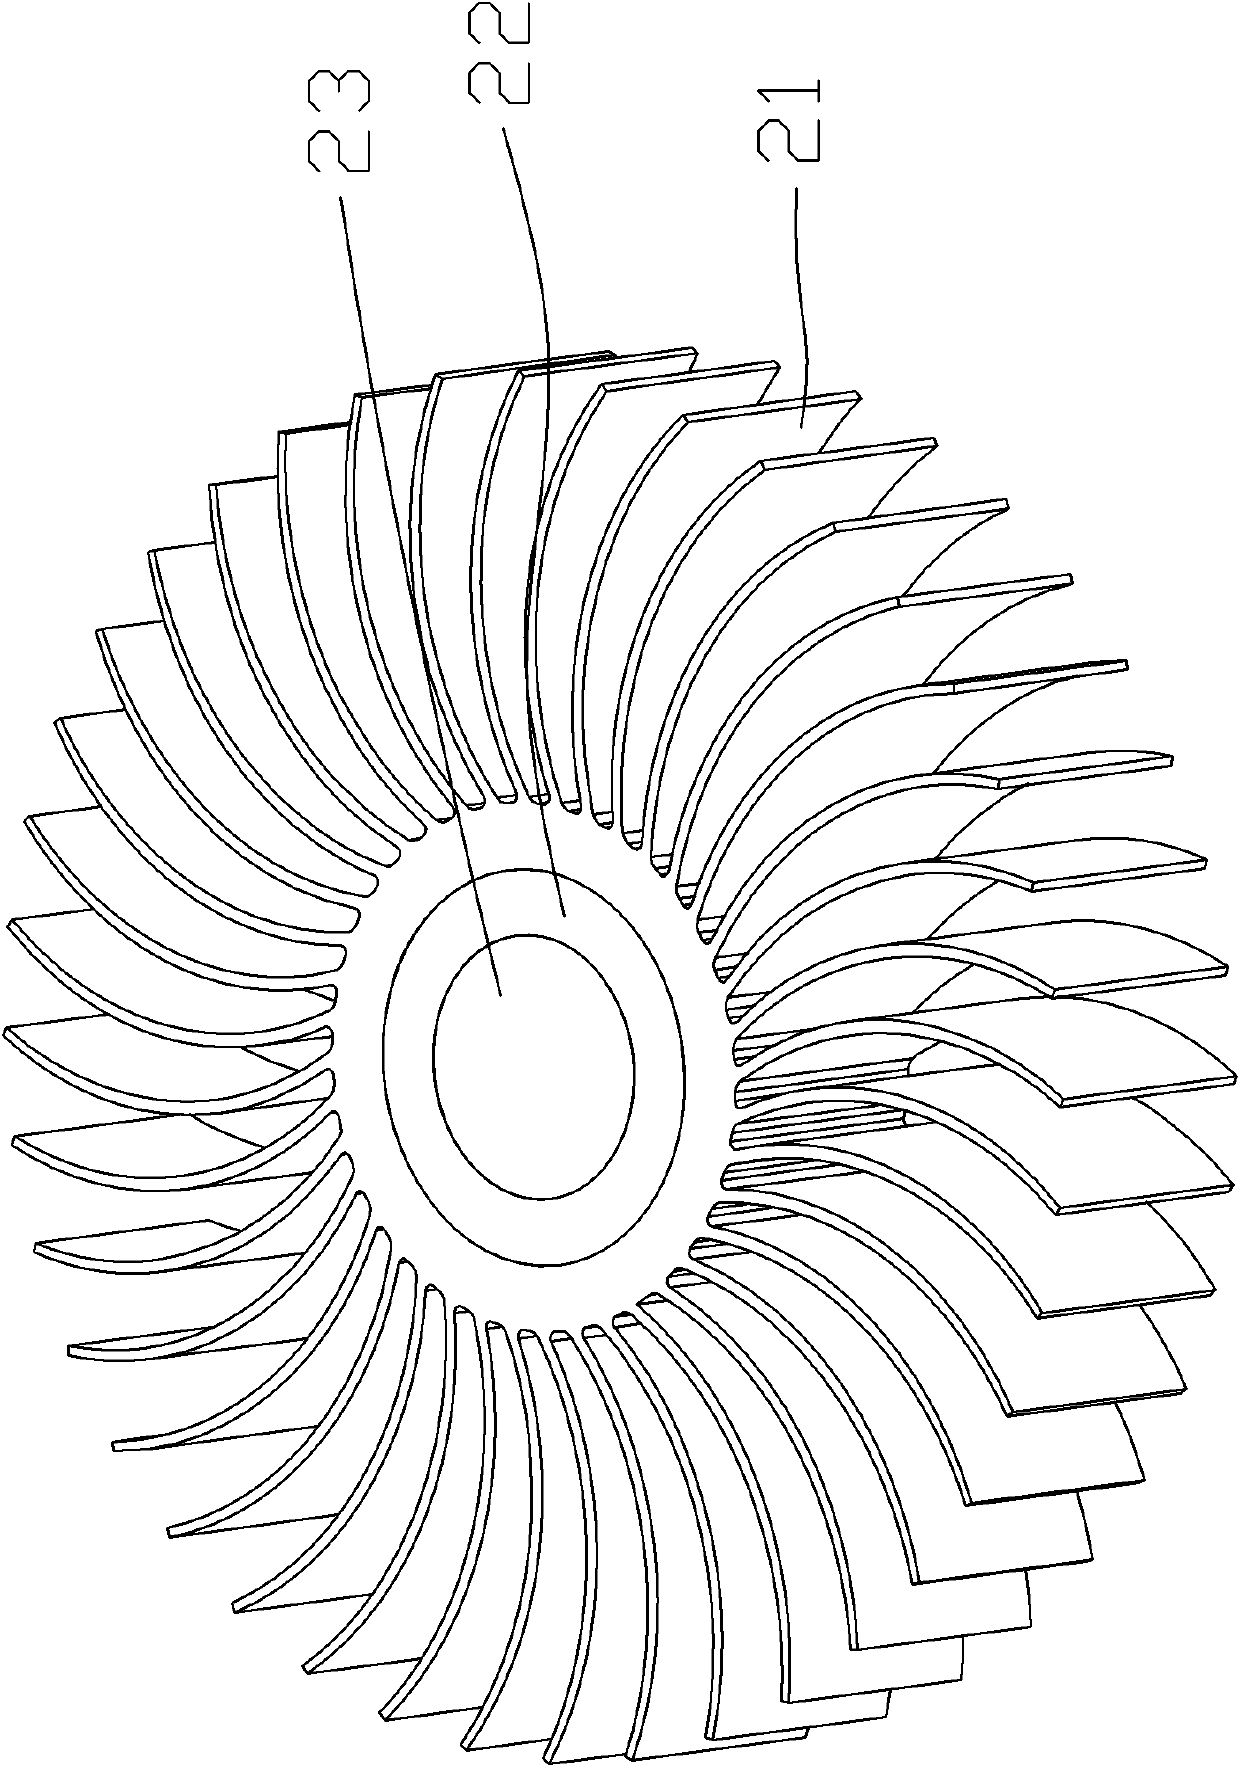 Radiator structure